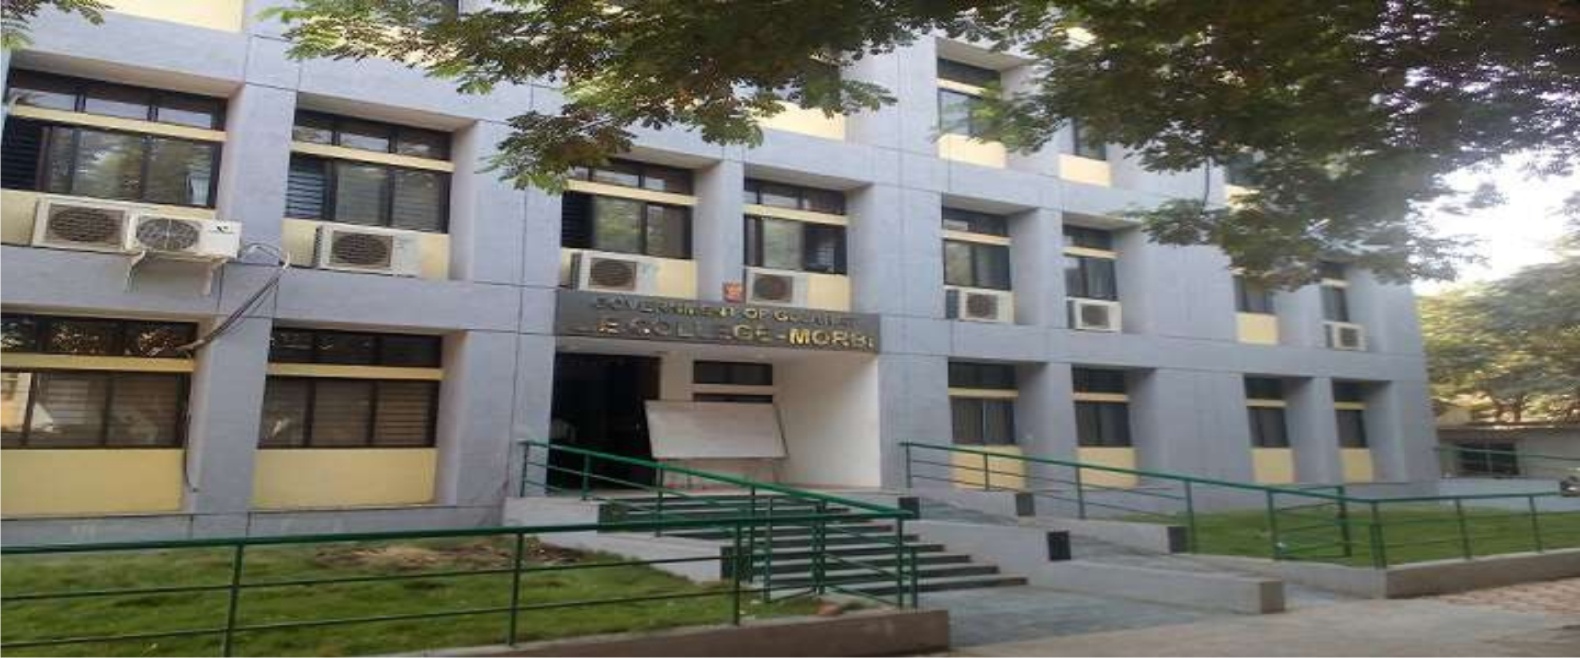 Lukhdhirji Engineering College, Morbi (LE / LEC) / Morbi Technical Institute (MTI)